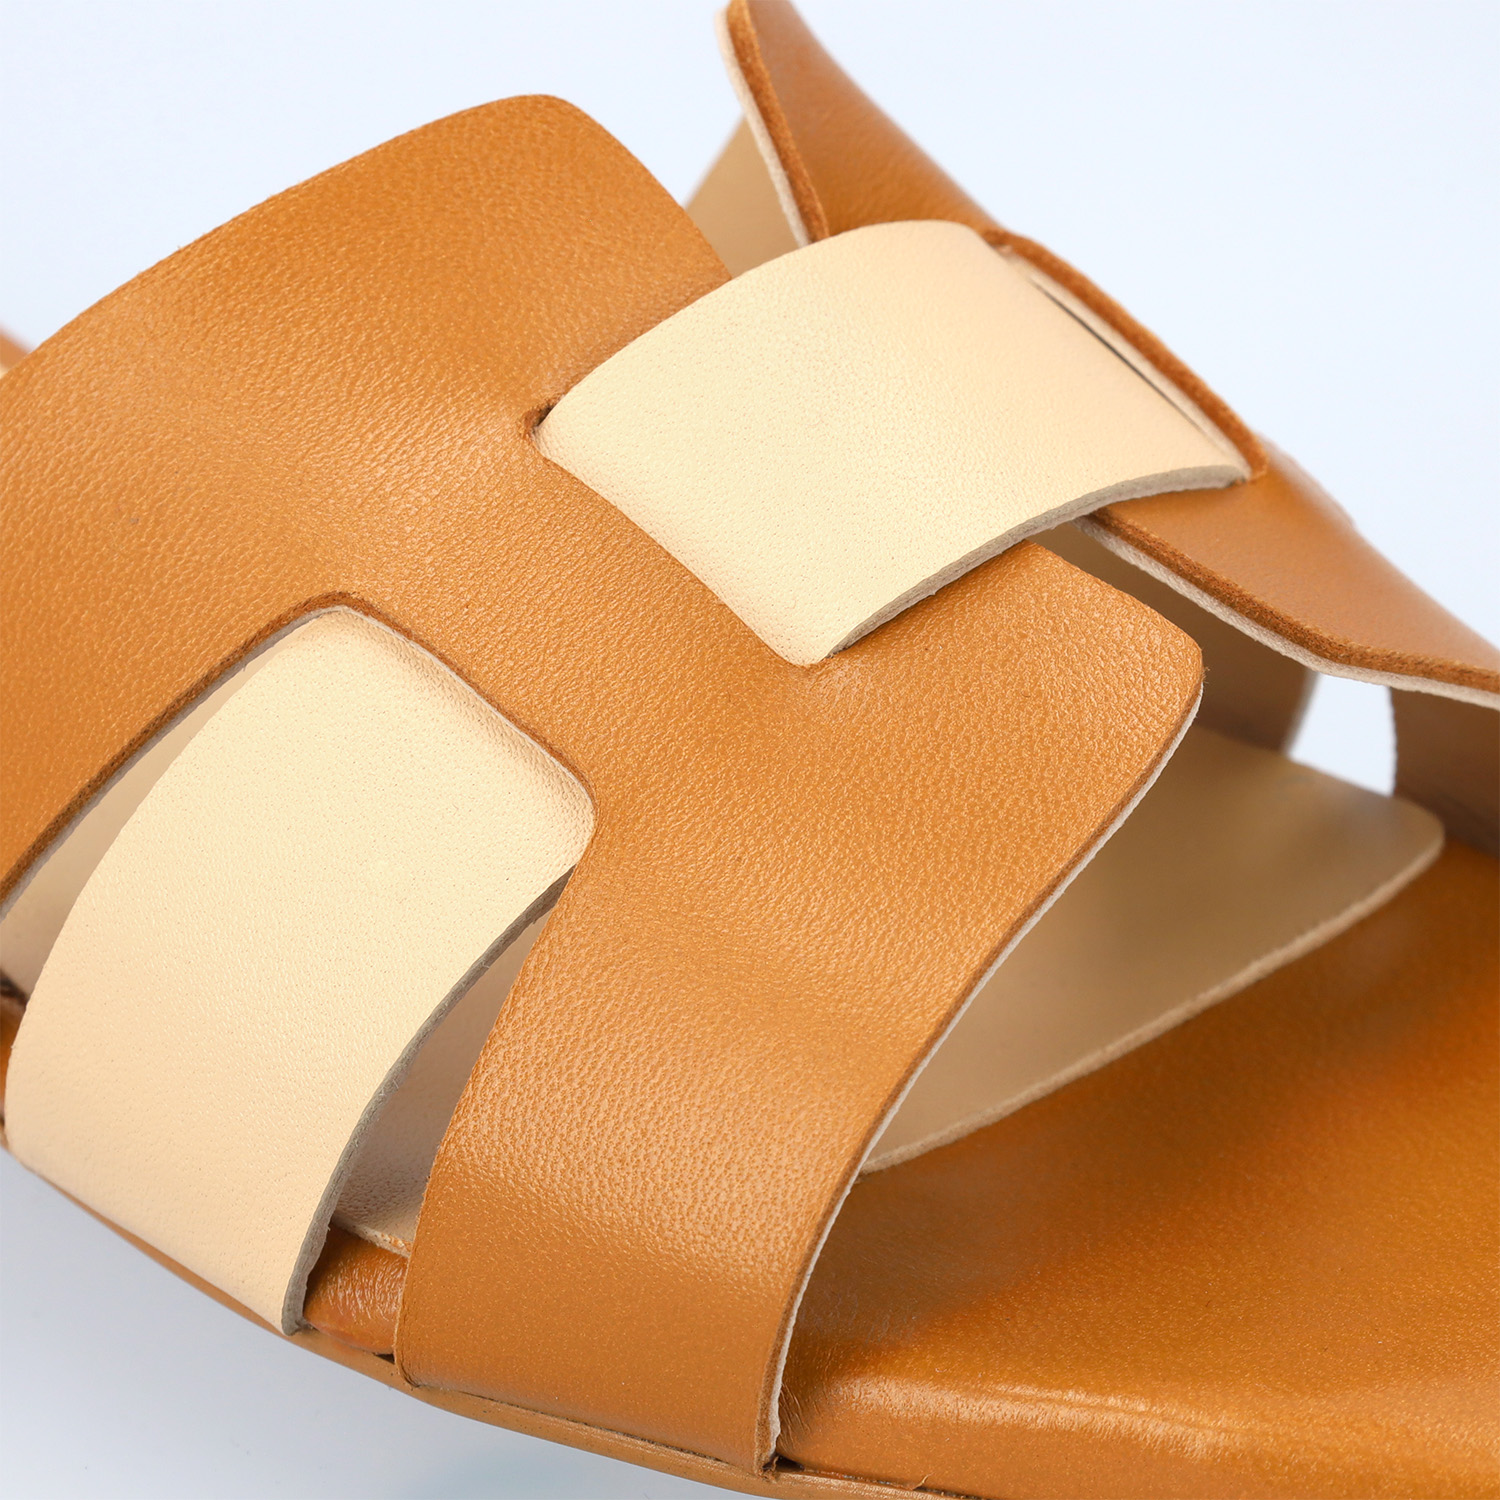 Sandale plate en cuir marron et beige 